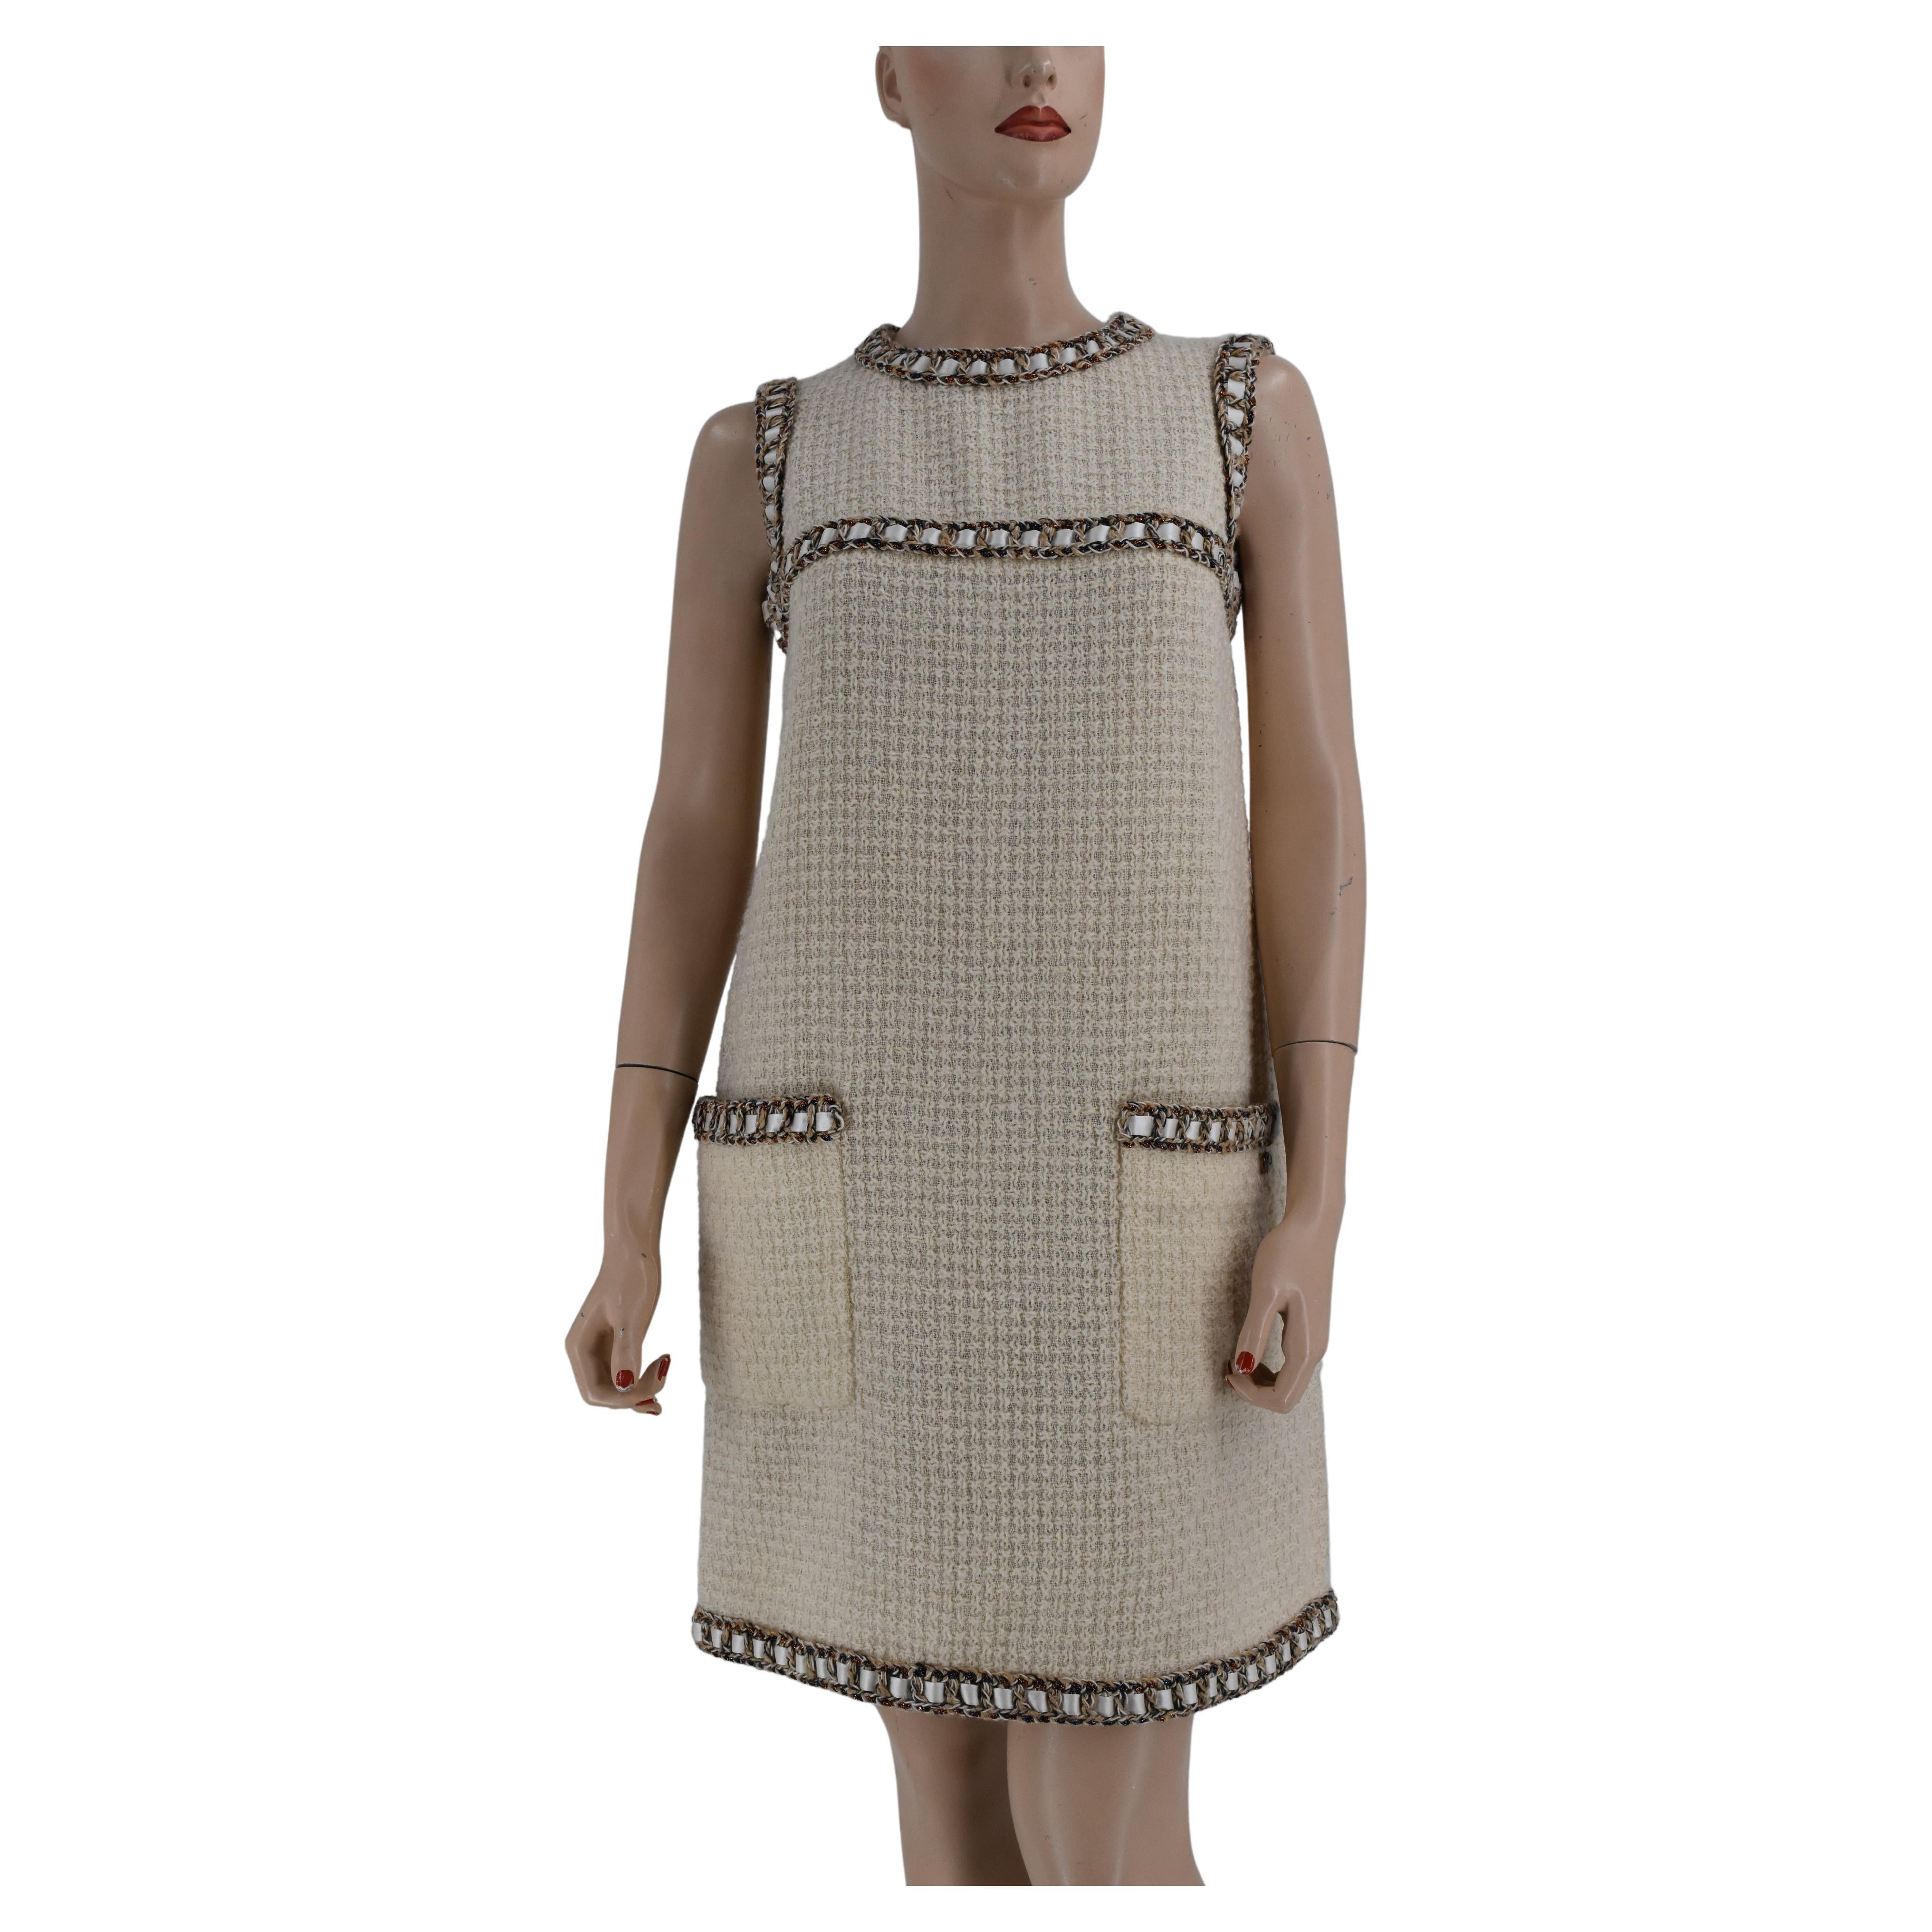 Chanel New 2016  Ribbon Embellished Dress 40 Rare For Sale